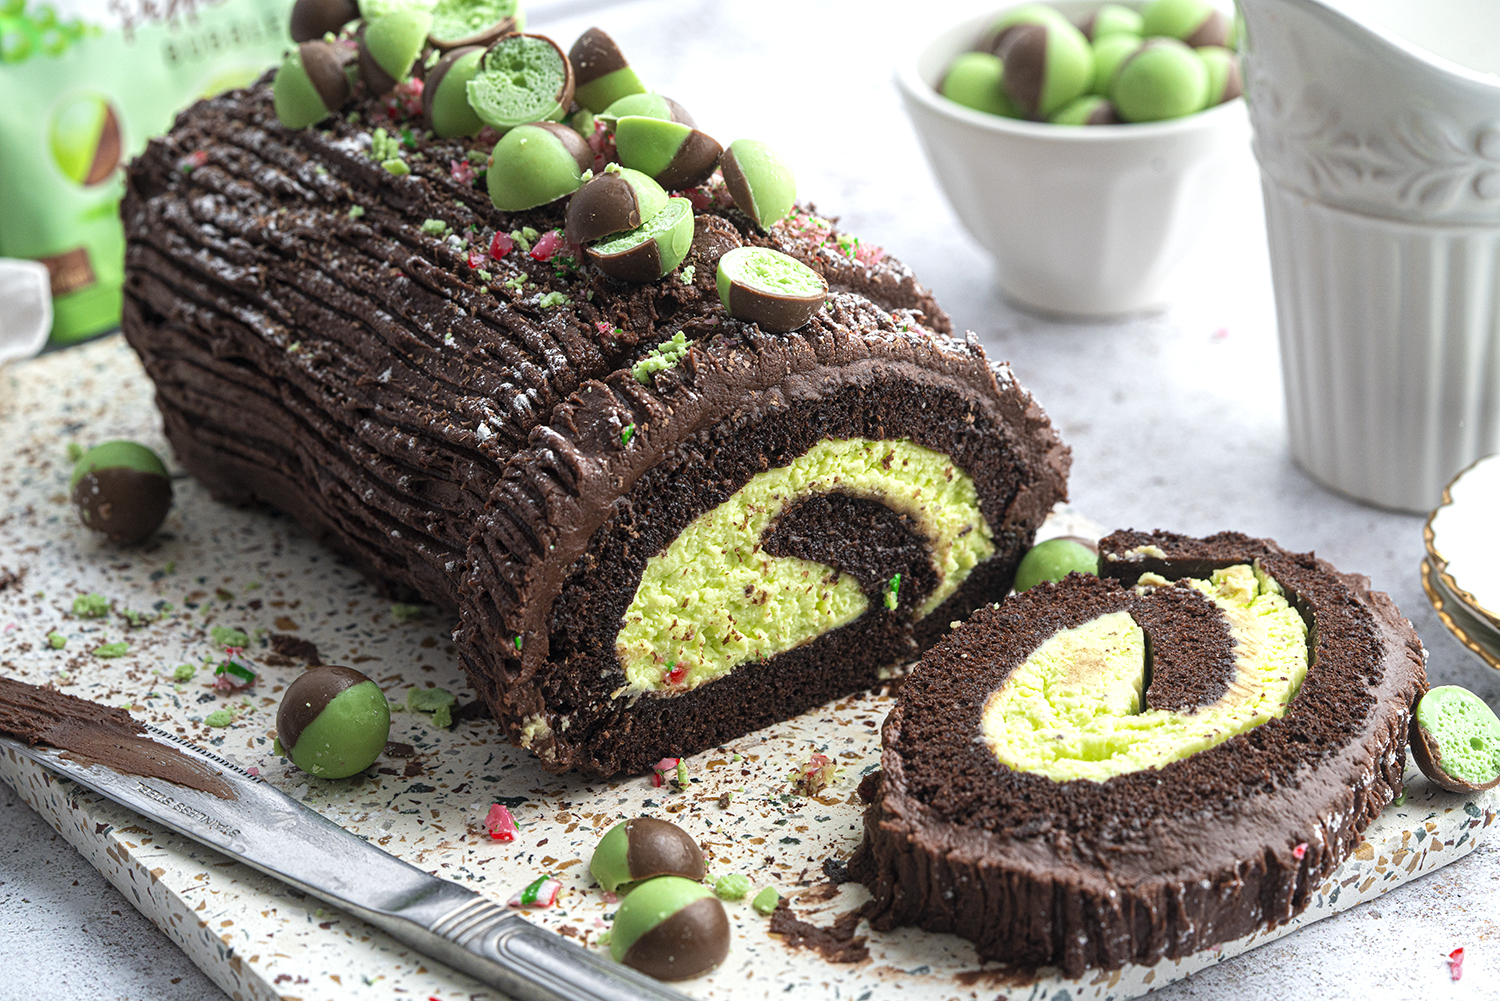 https://glutenfreecuppatea.co.uk/wp-content/uploads/2020/11/gluten-free-mint-chocolate-yule-log-recipe-featured.jpg